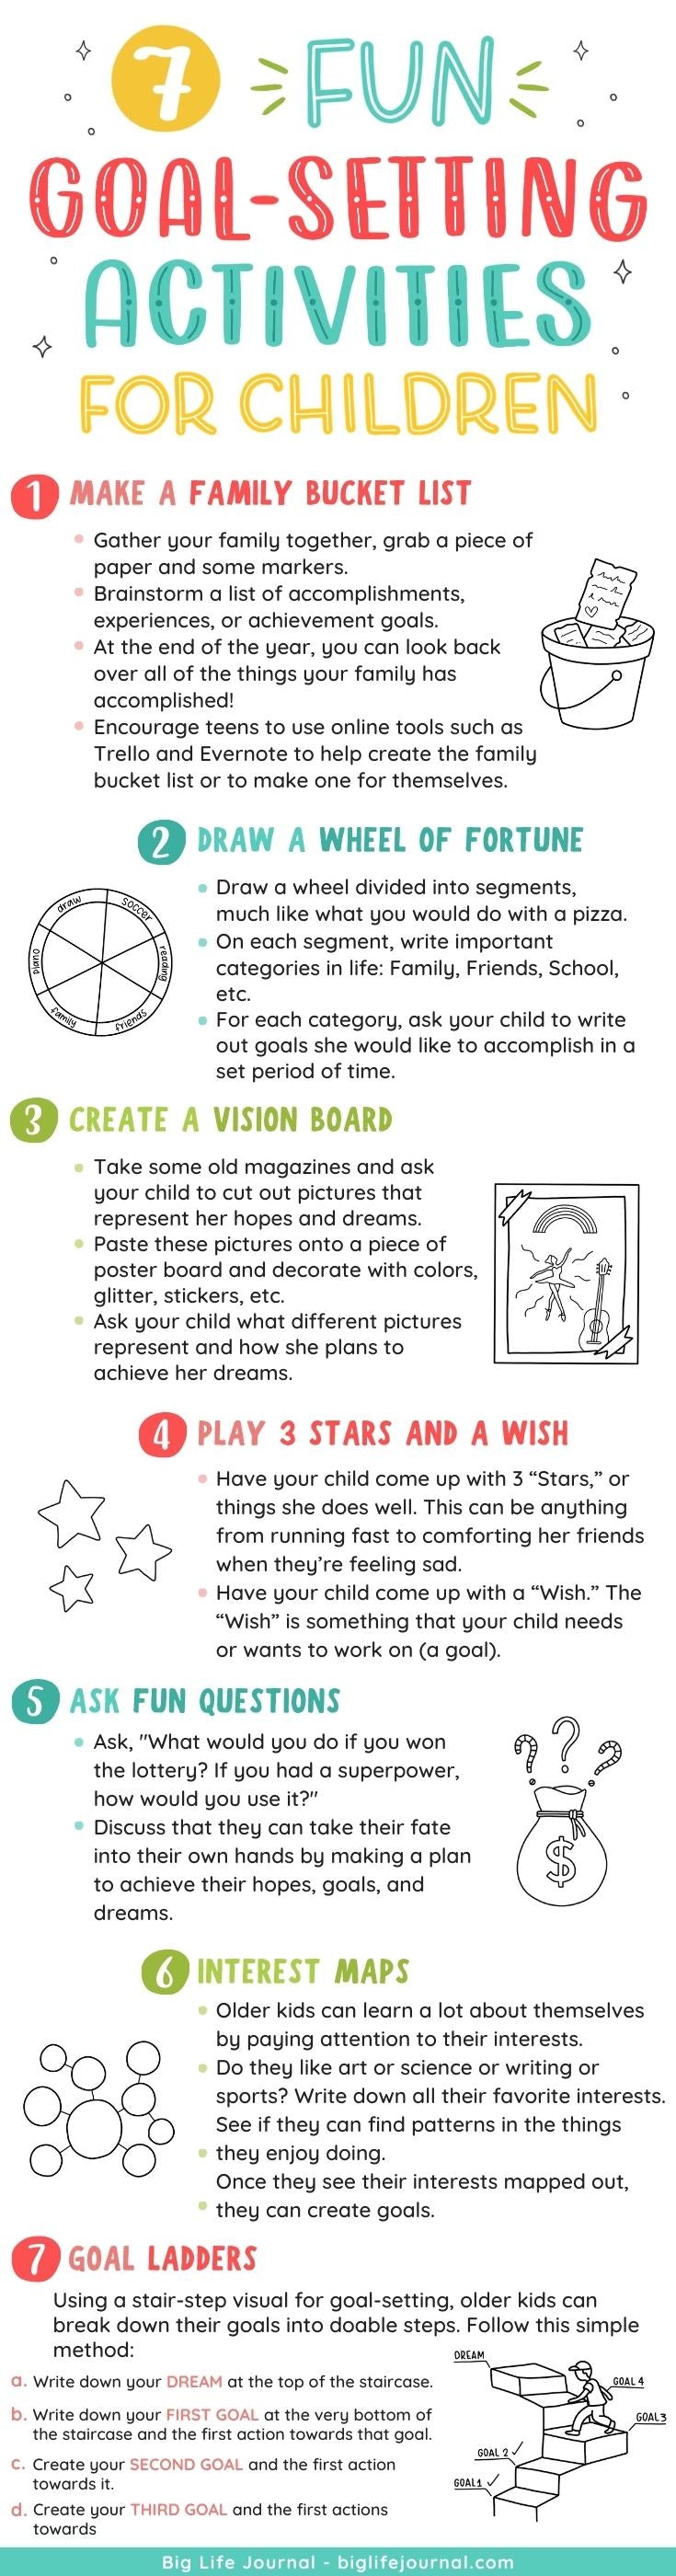 7 Fun Goal-Setting Activities for Children | Big Life Journal